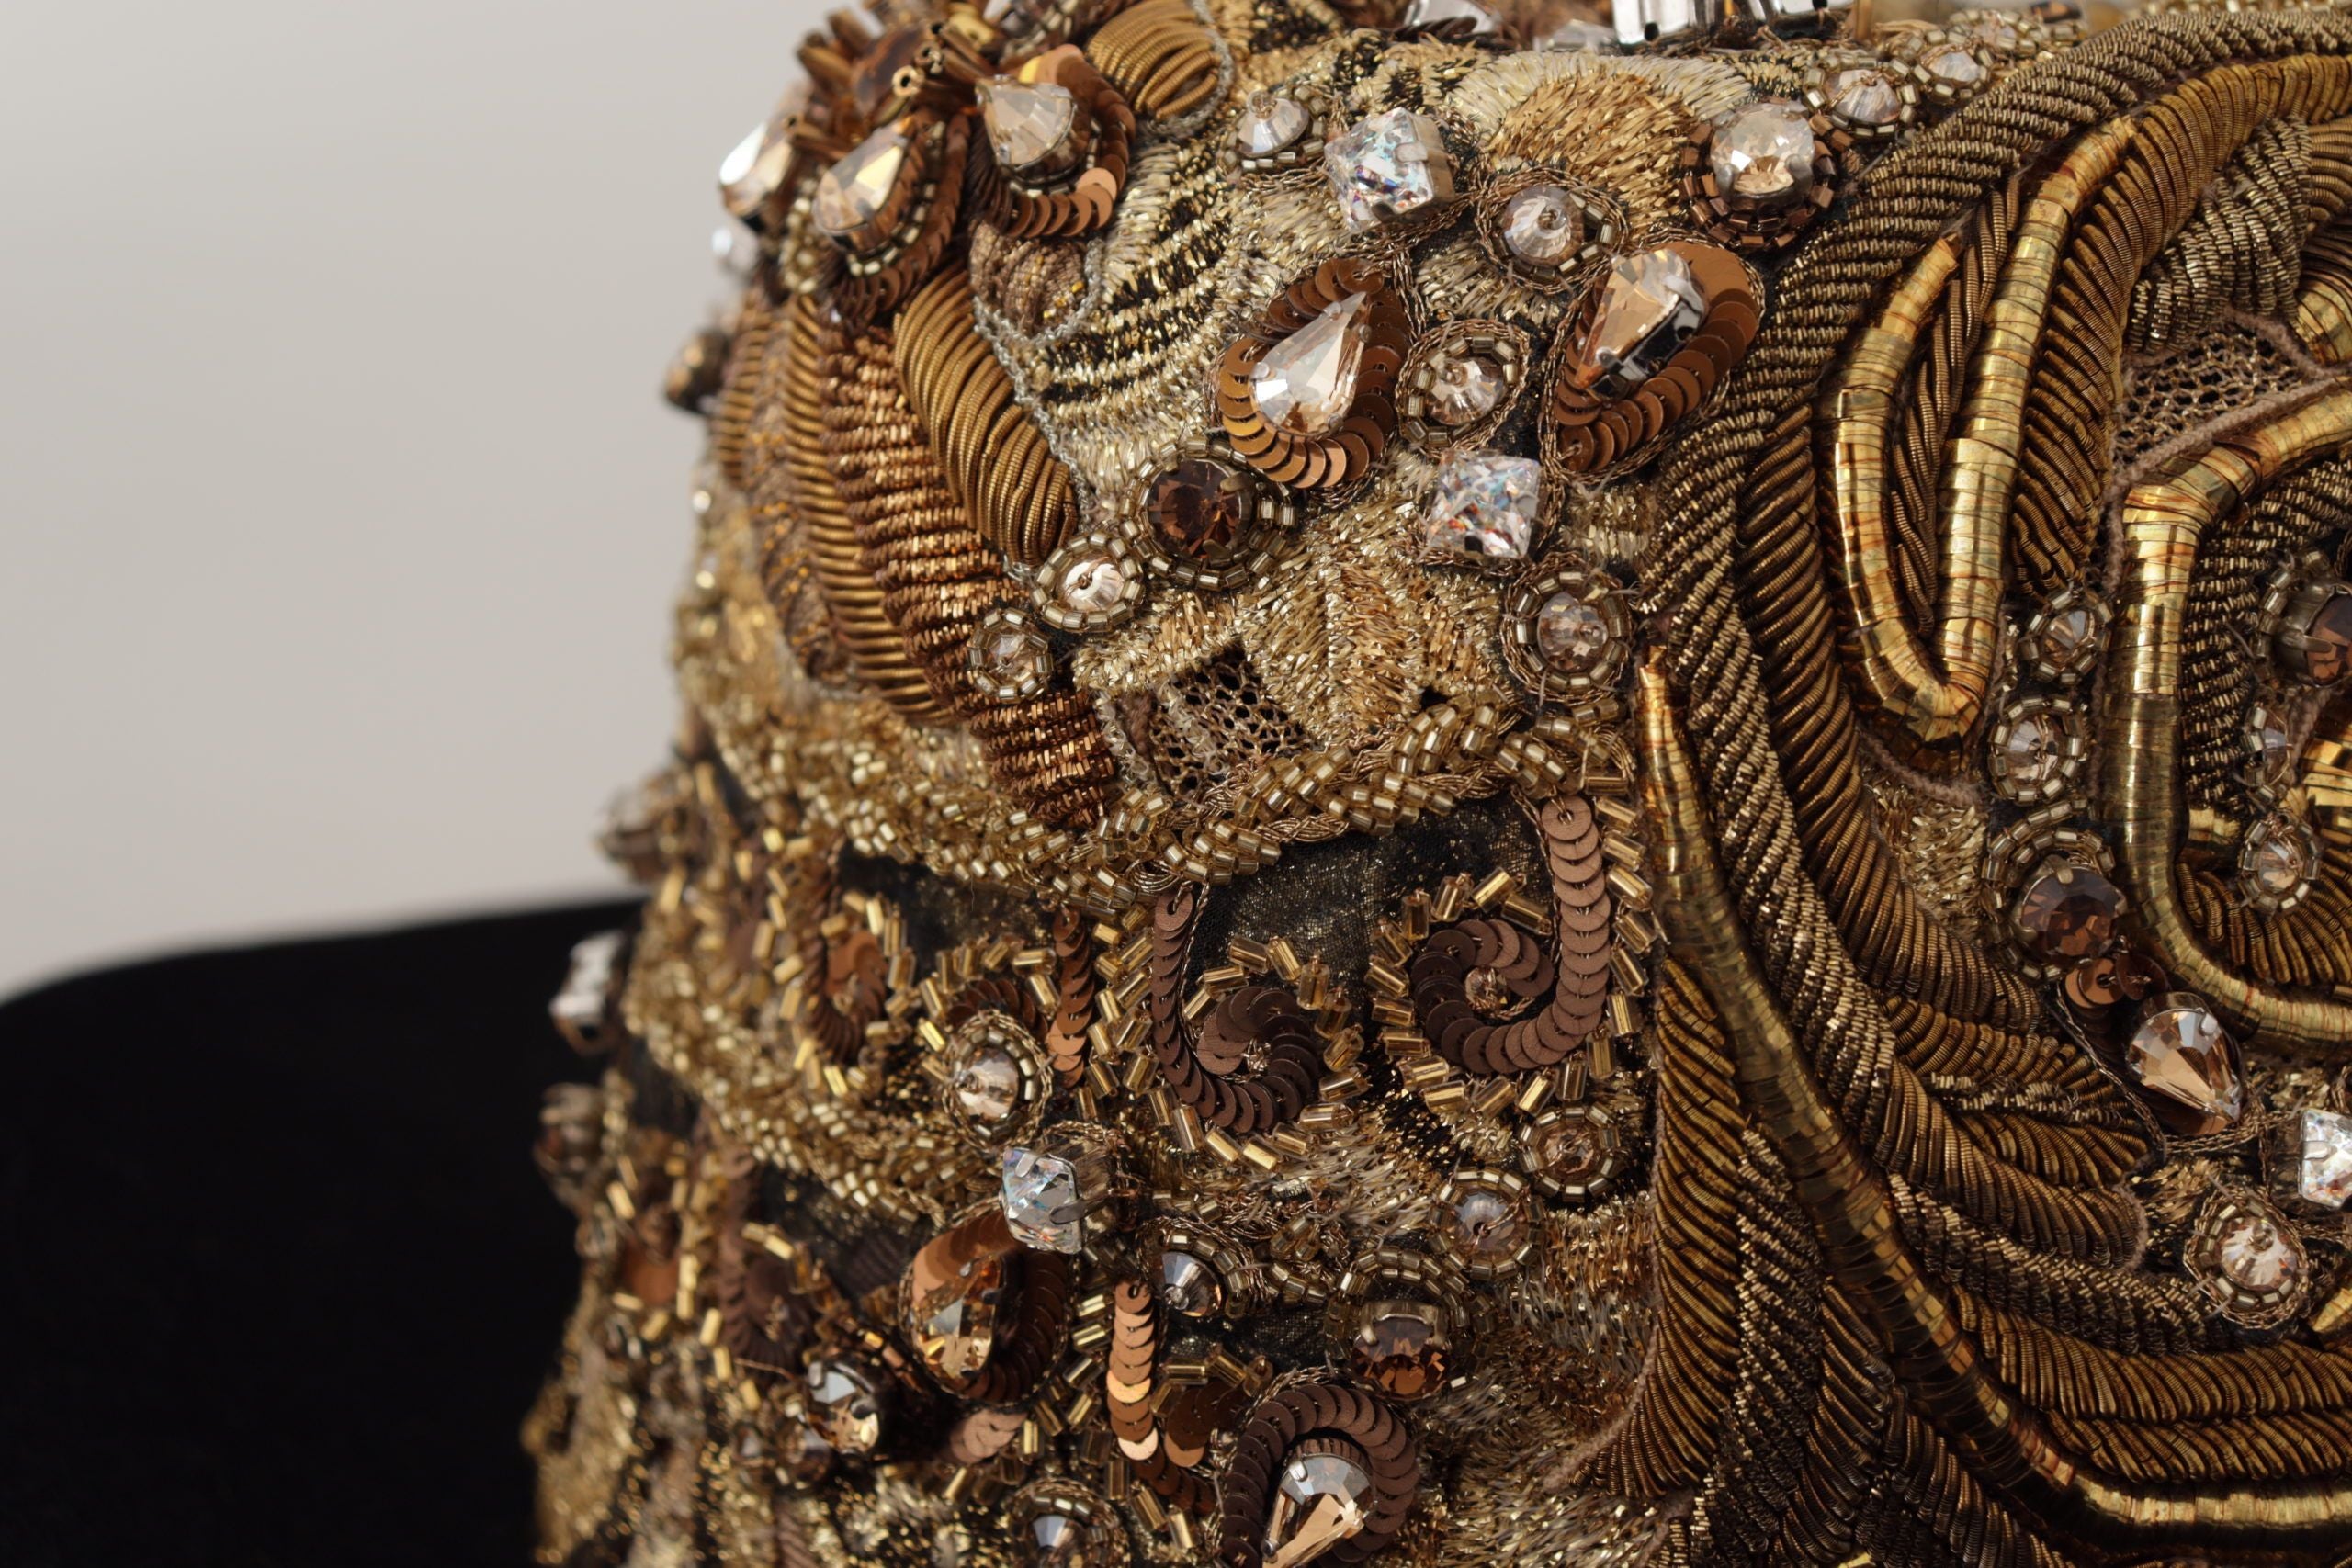 Dolce & Gabbana Elegant Black Gold Studded Fedora